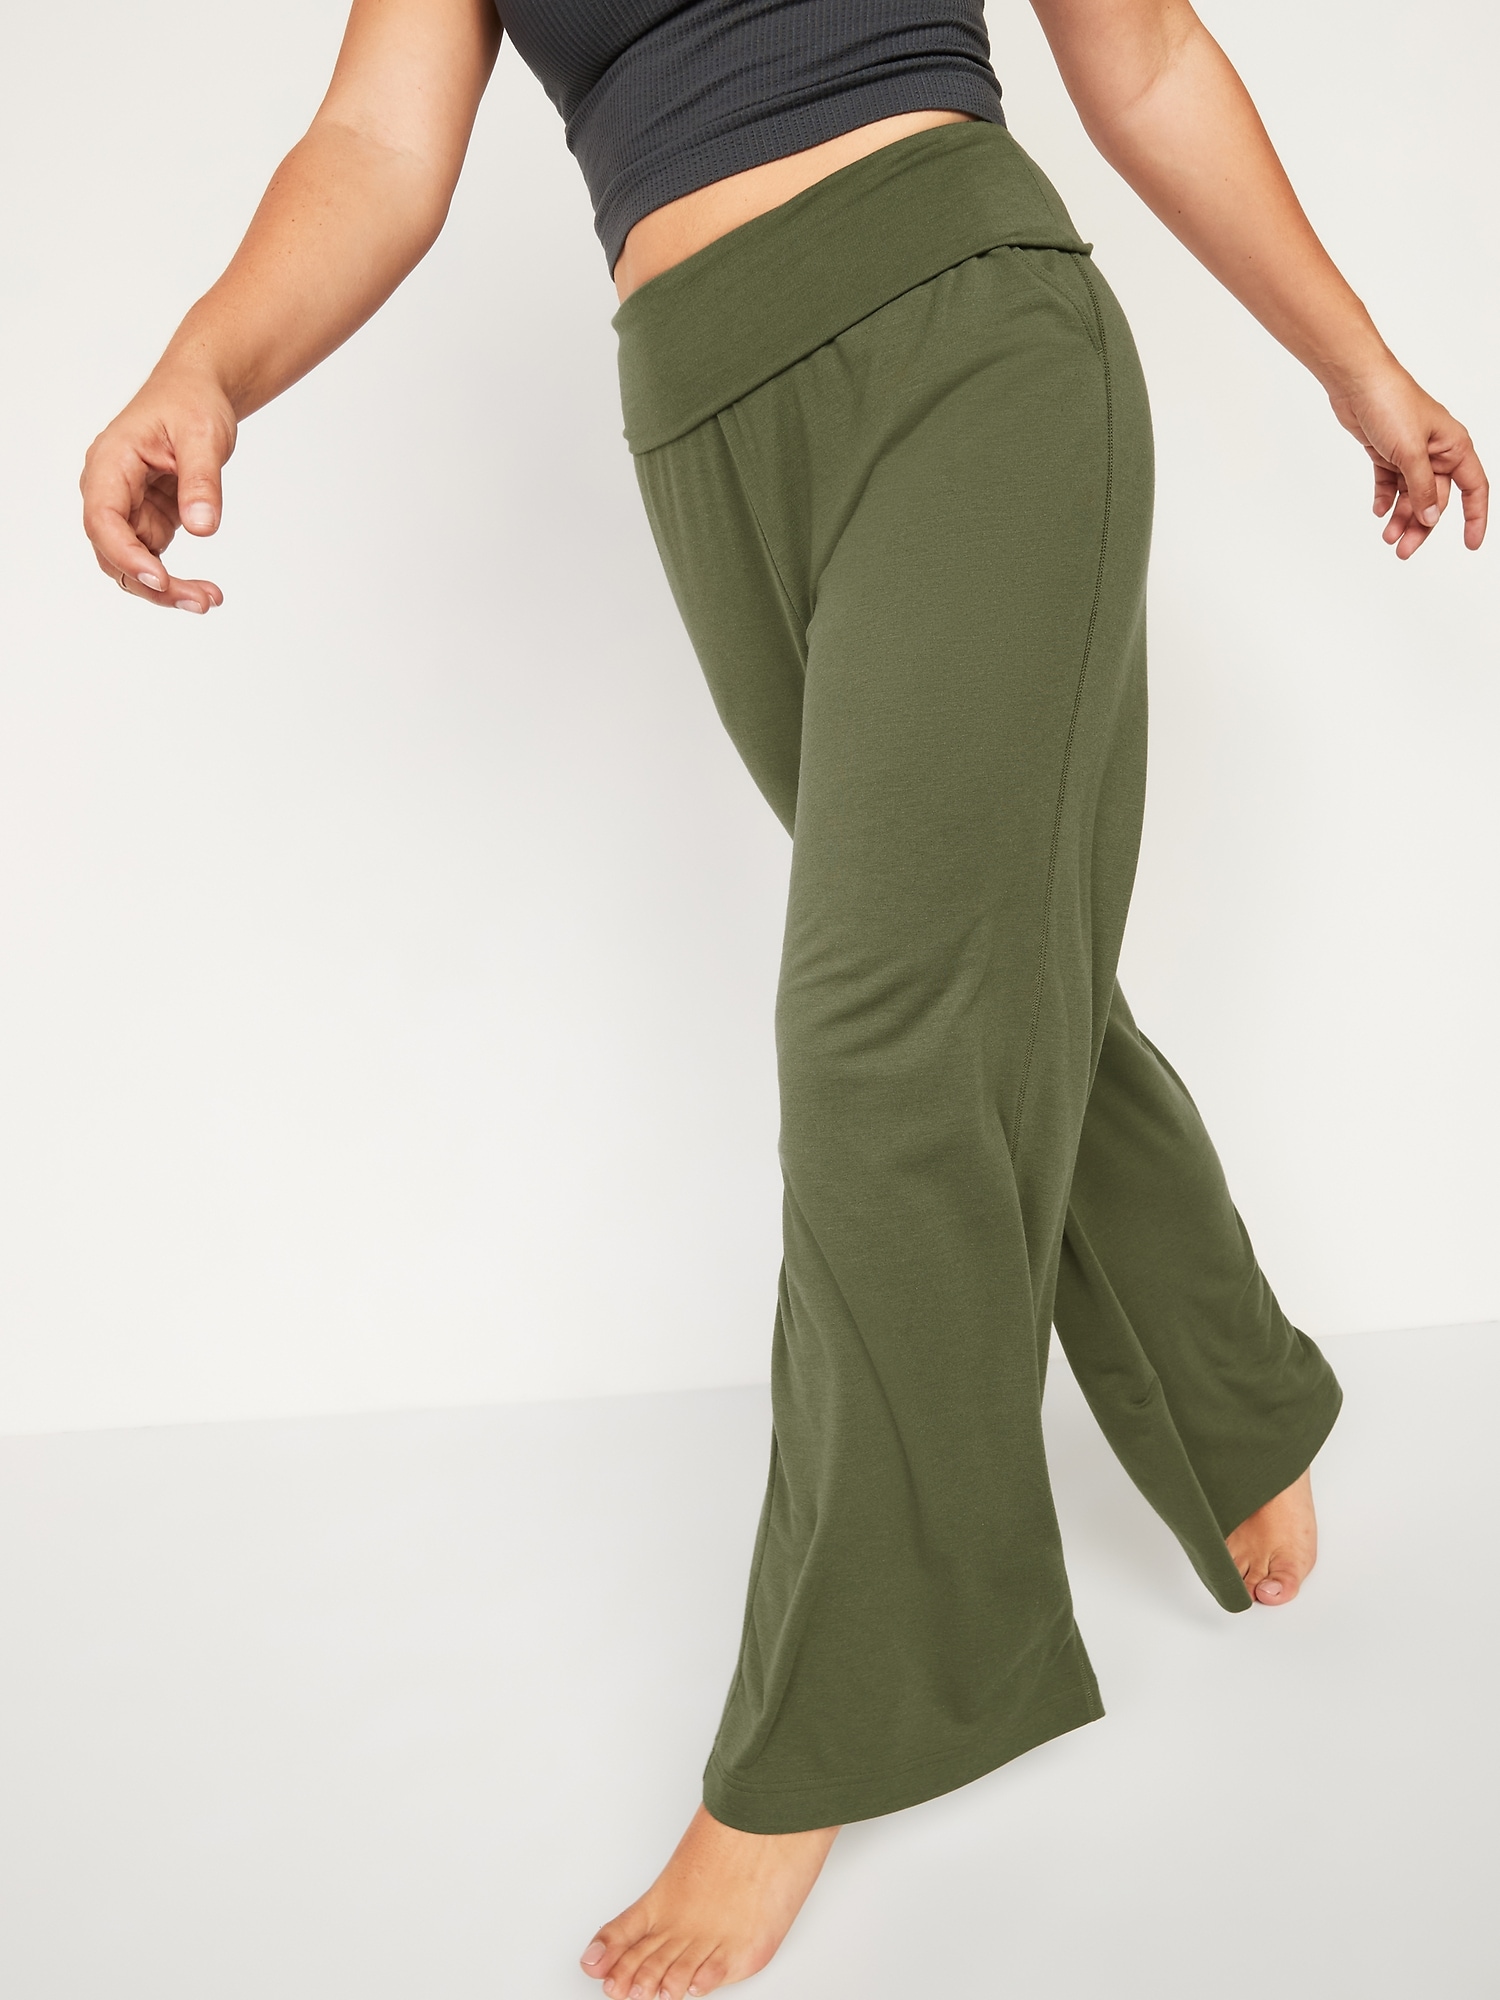 Women's Fold-Over Yoga Pants, Old Navy